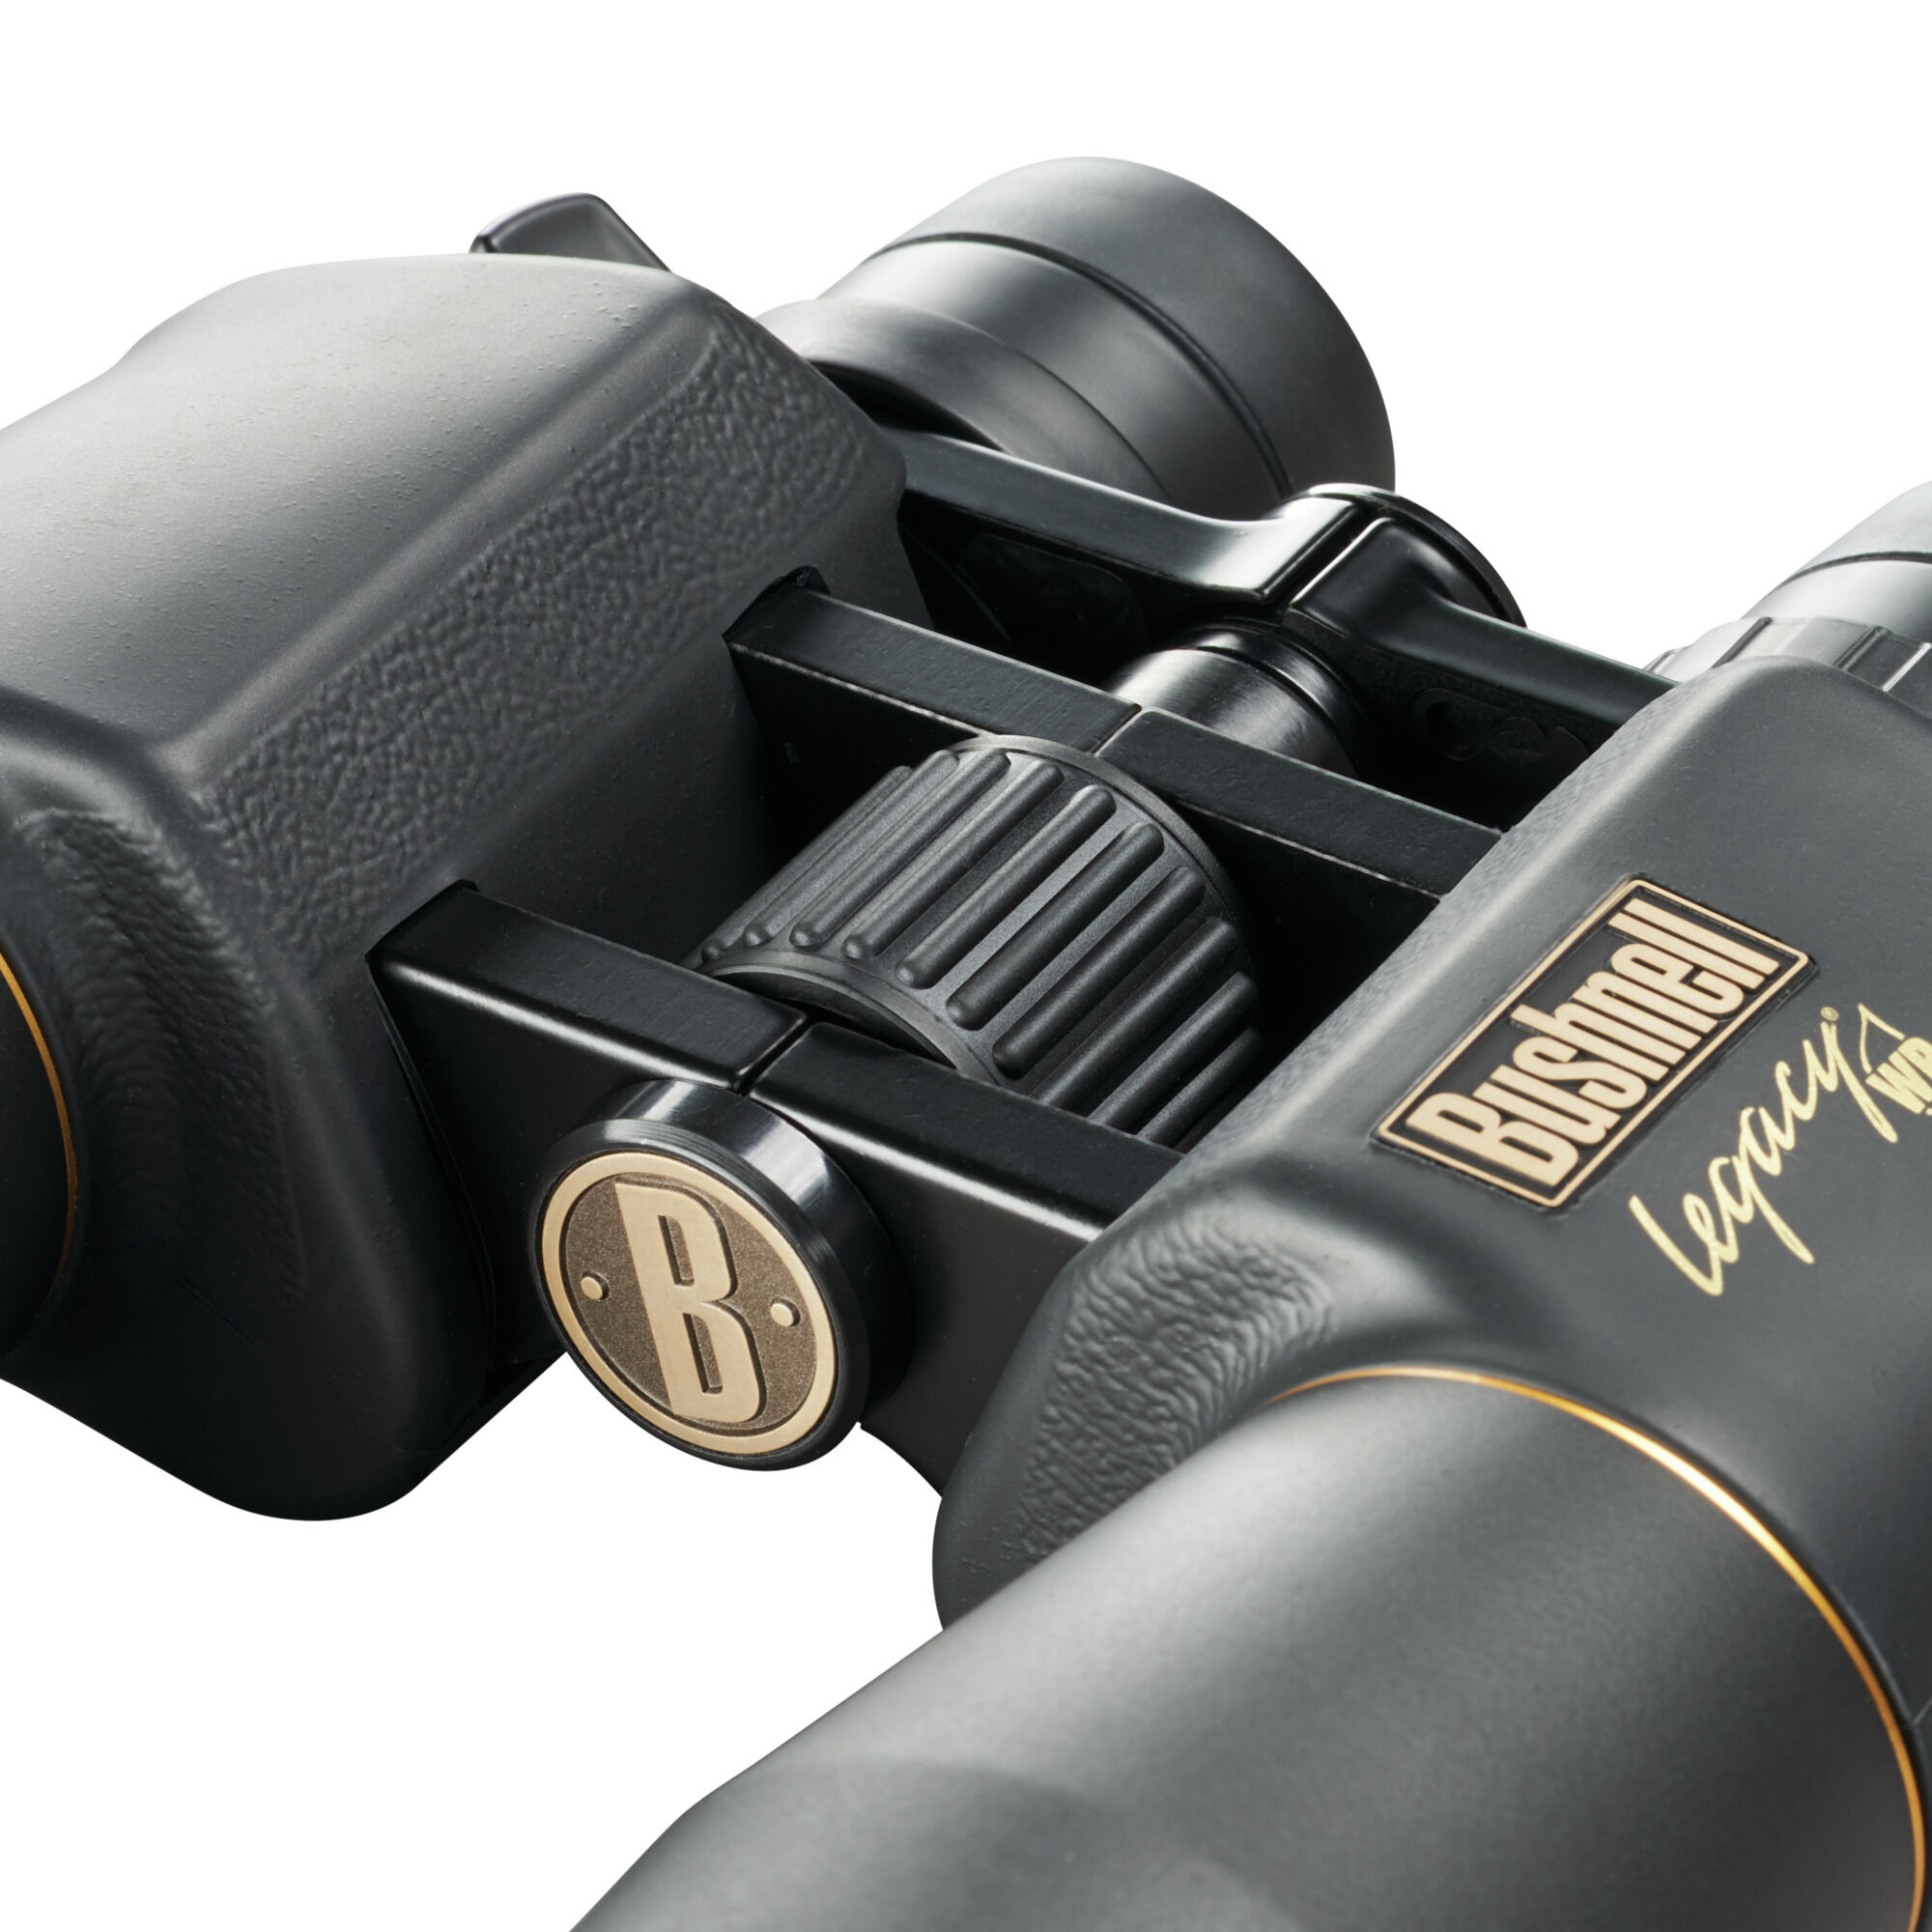 Legacy® WP Hunting Binoculars, 10-22x50 Magnification | Bushnell